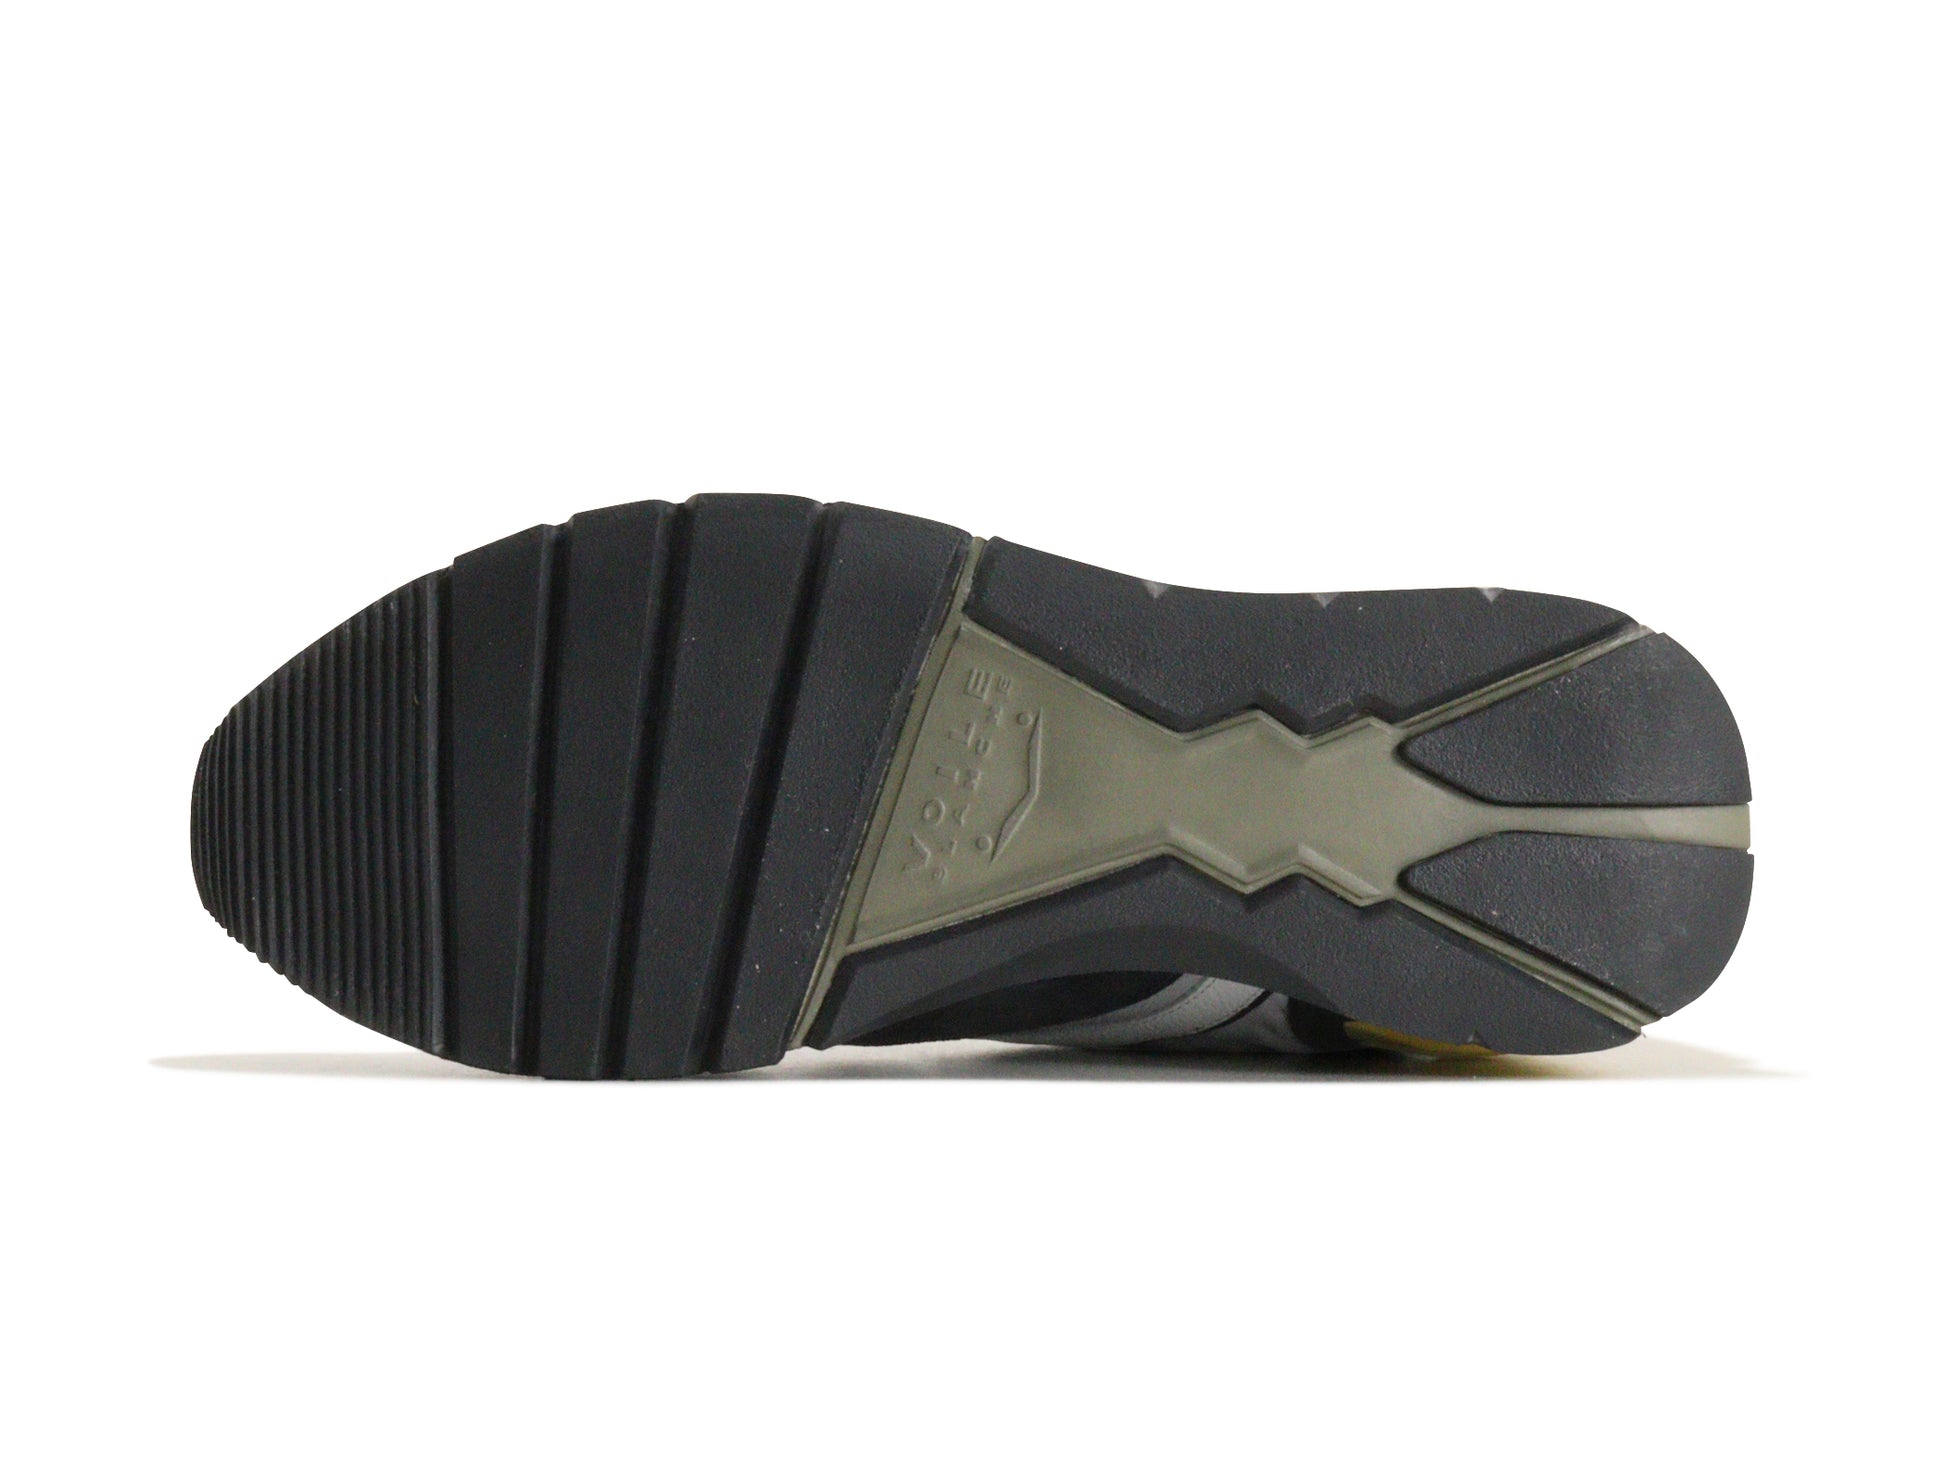 Voile Blancheのスニーカー「02/1b55」の靴底の商品画像